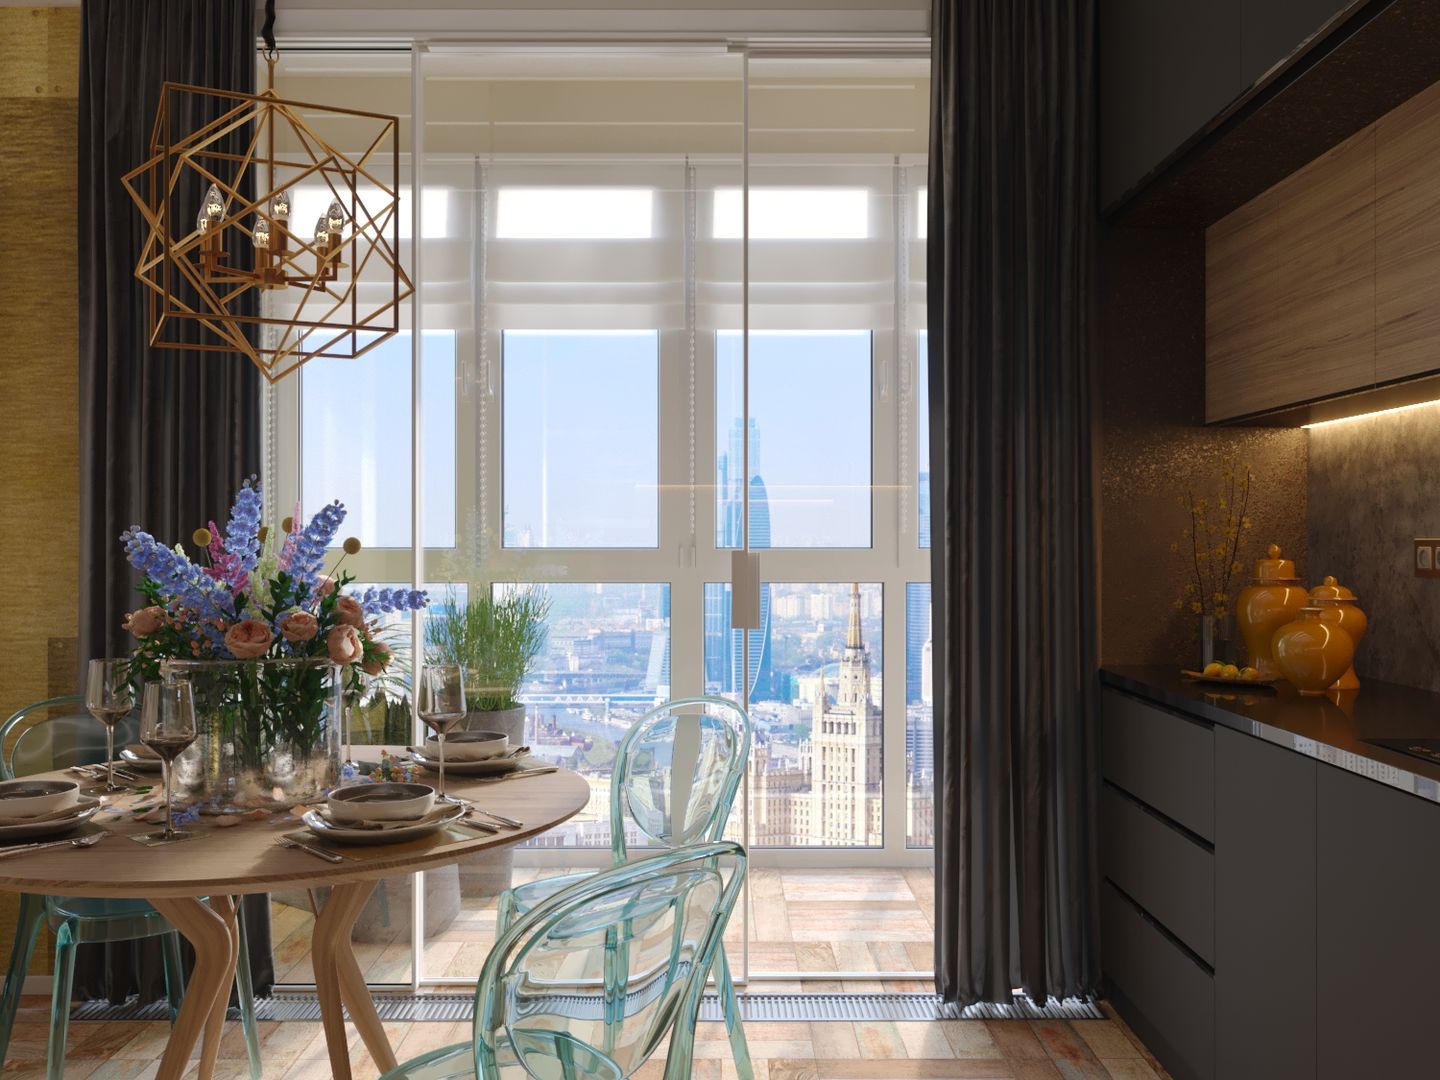 Кухня с панорамными окнами в квартире фото дизайн